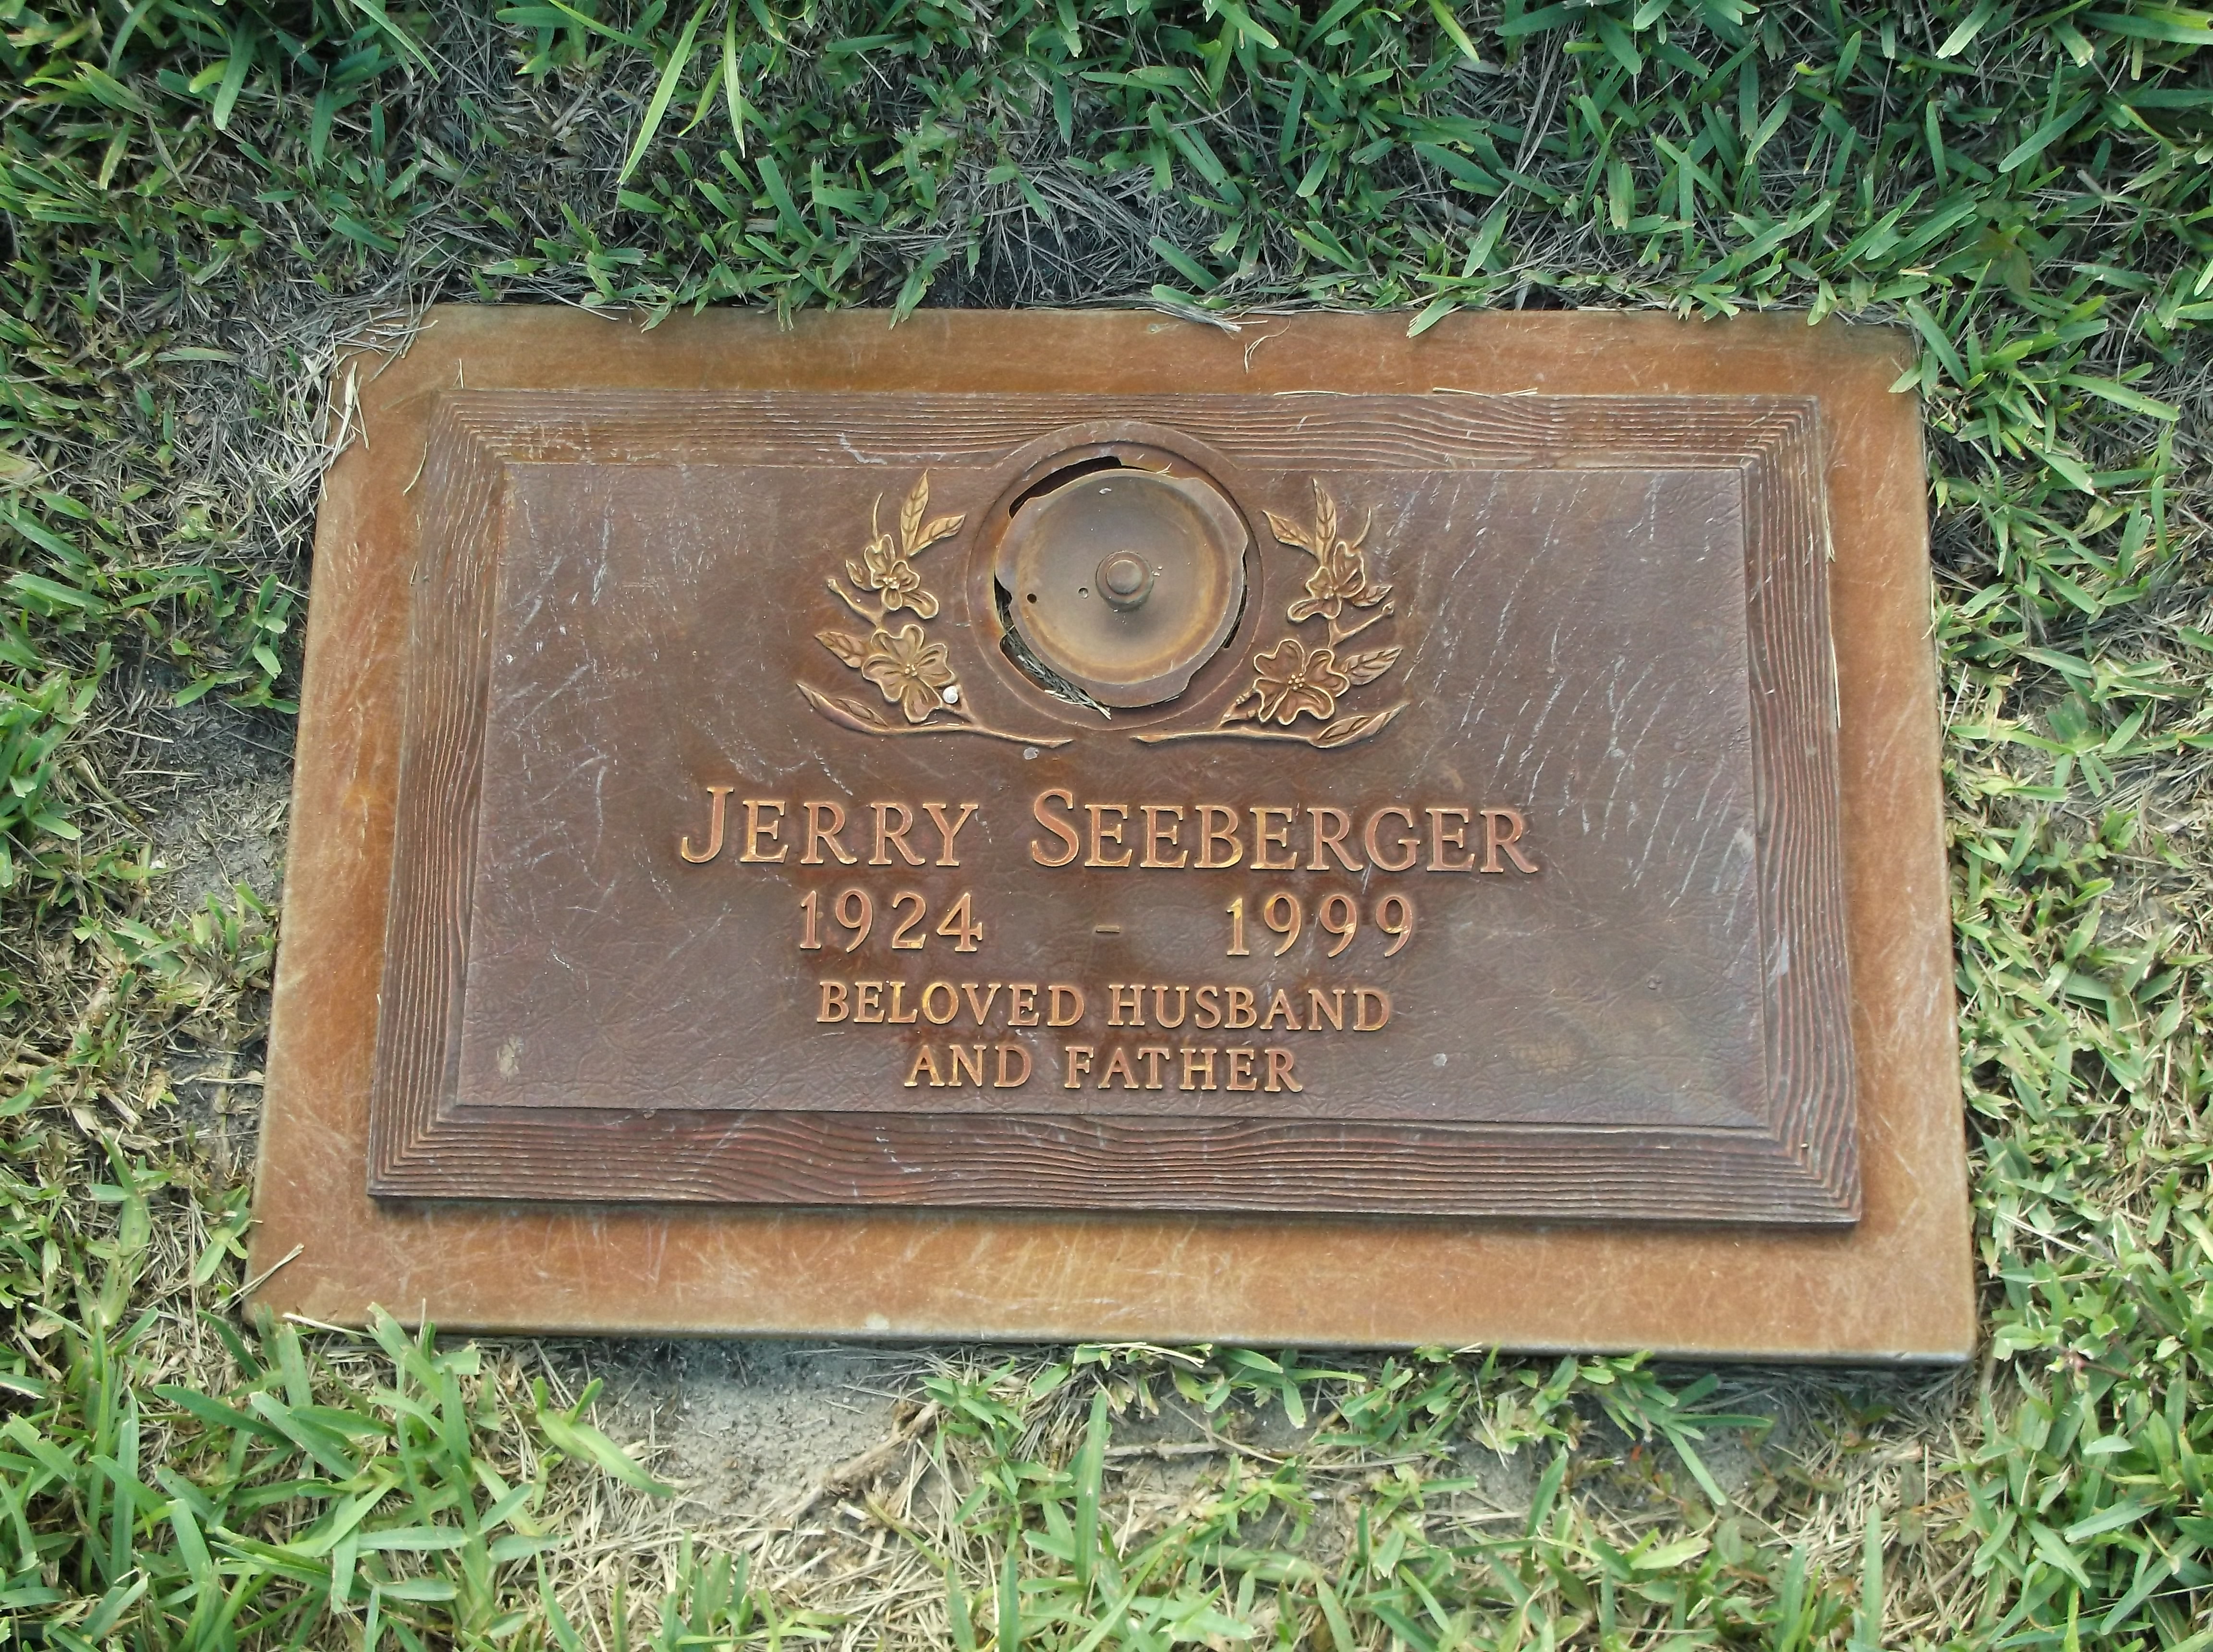 Jerry Seeberger